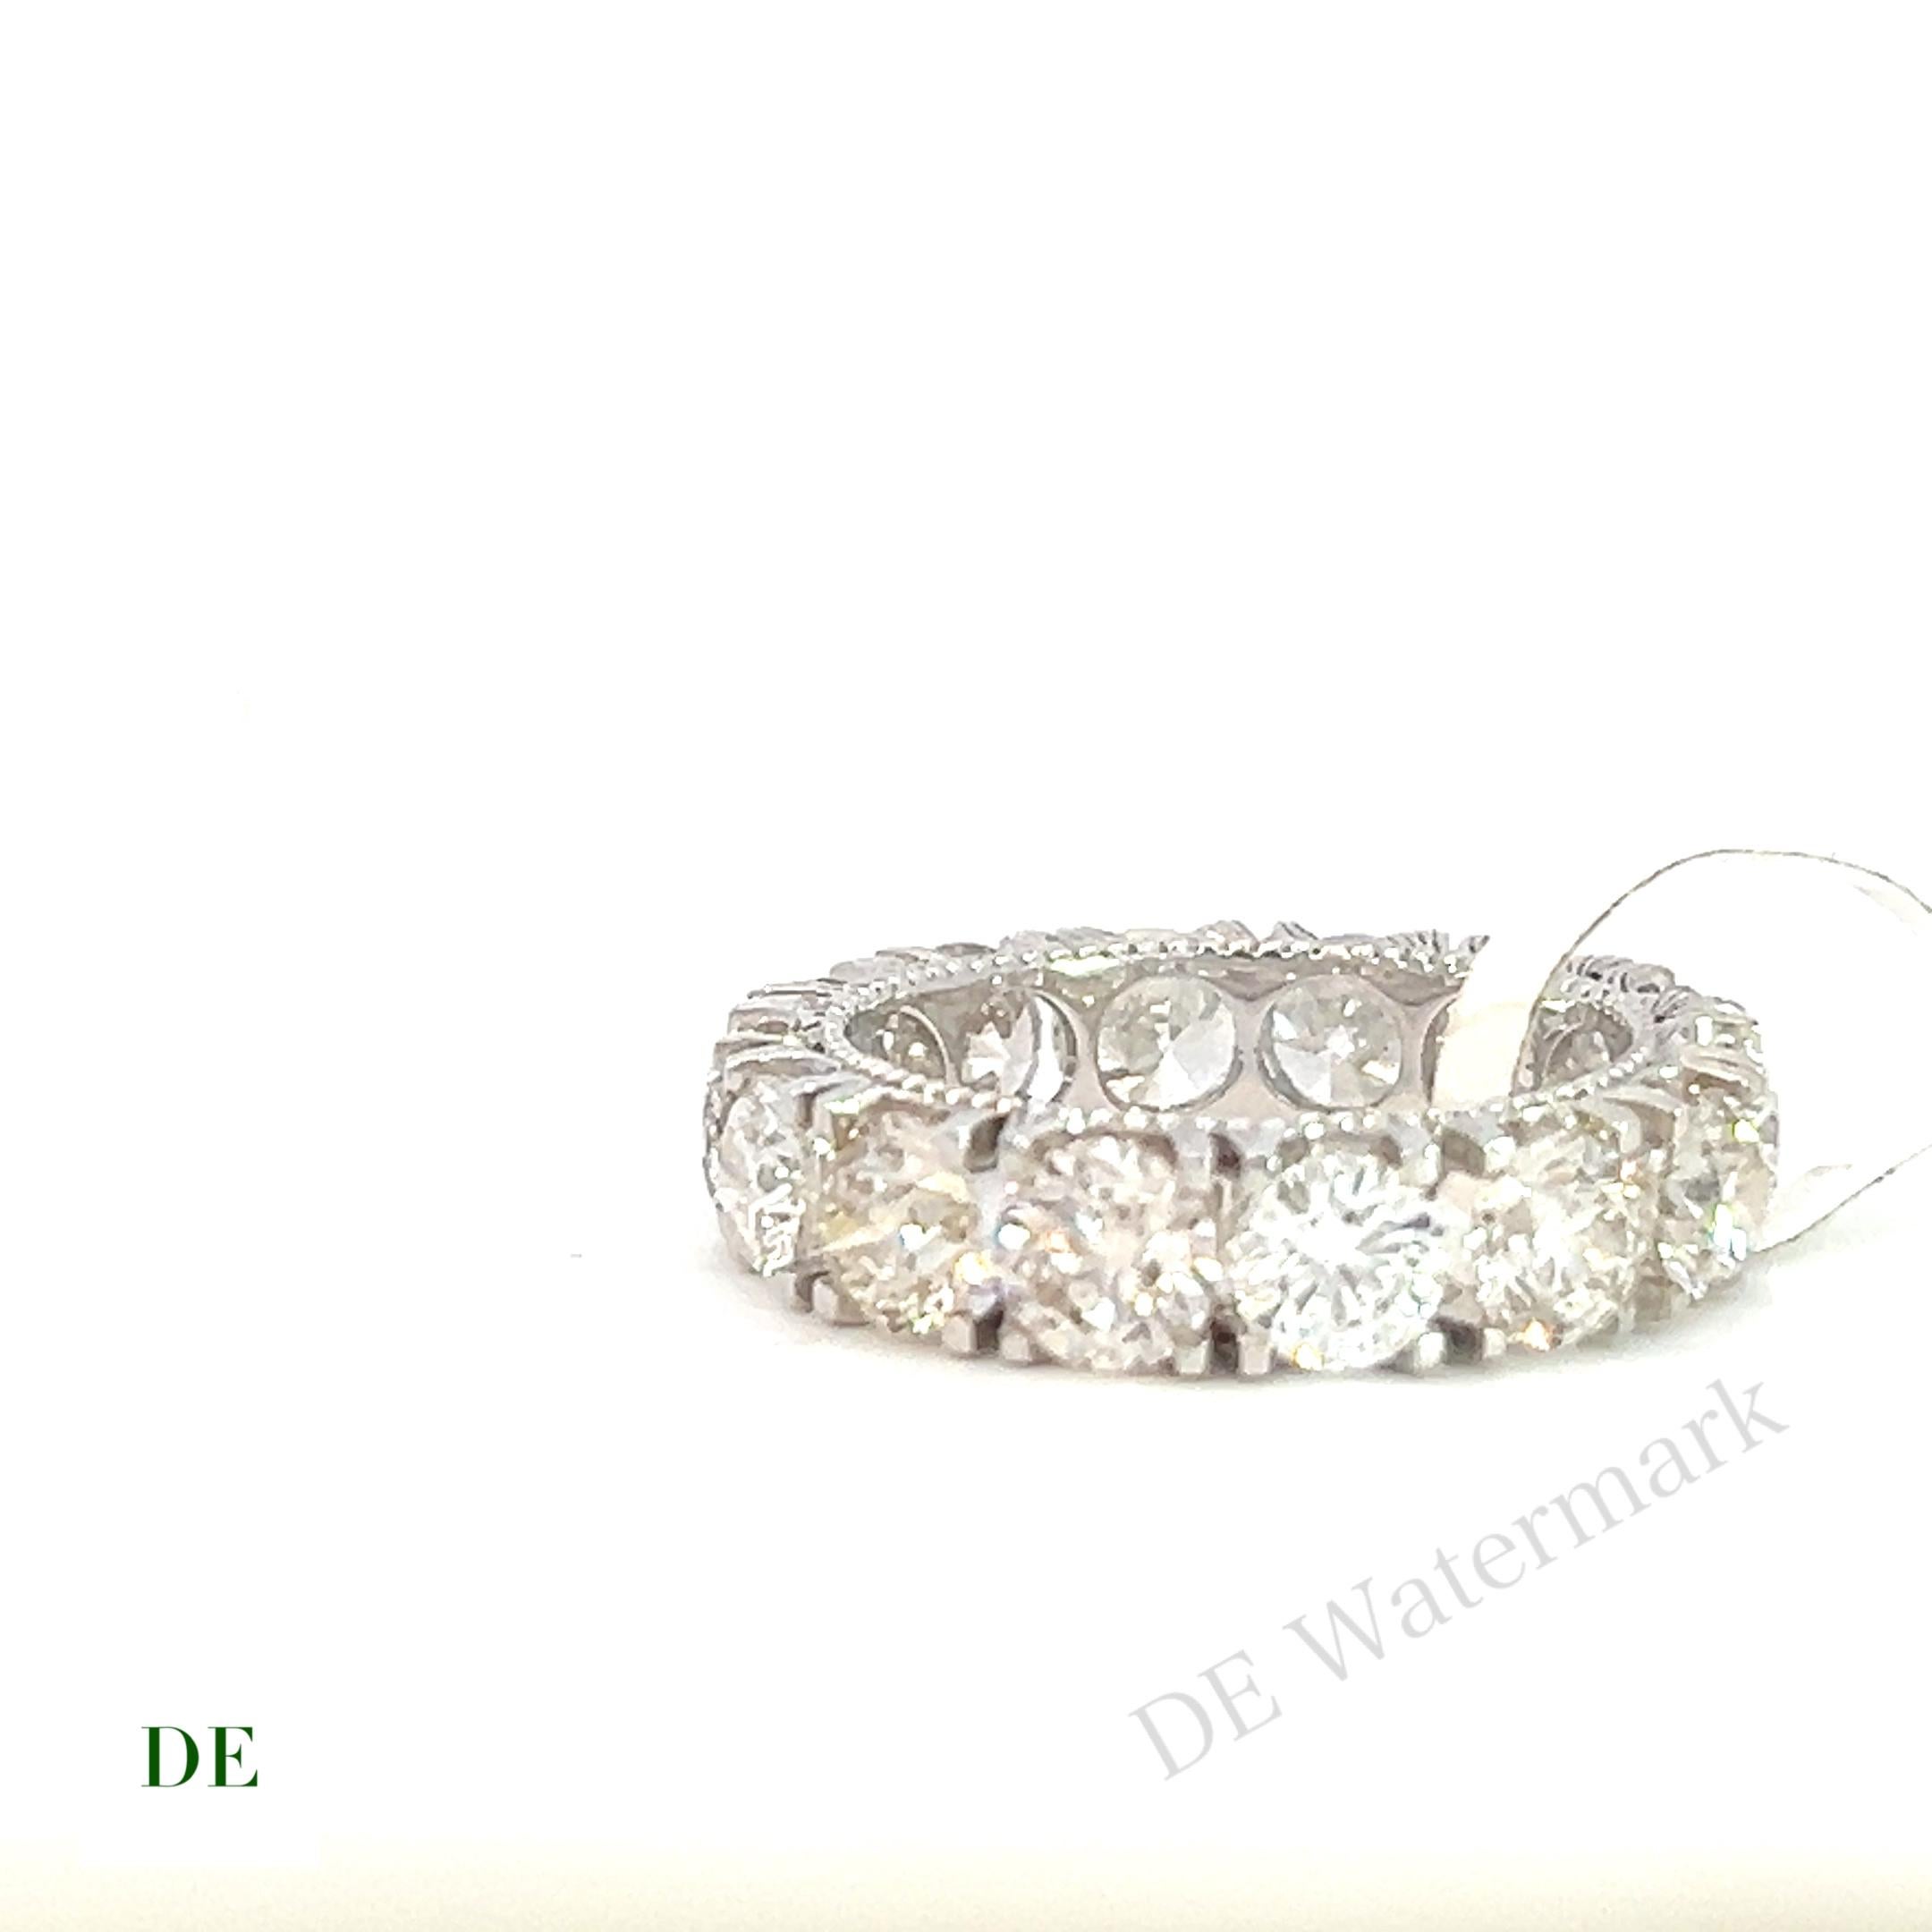 Rare 14k White Gold Old European Style 5.64 Carat Diamond Eternity Band Ring For Sale 4